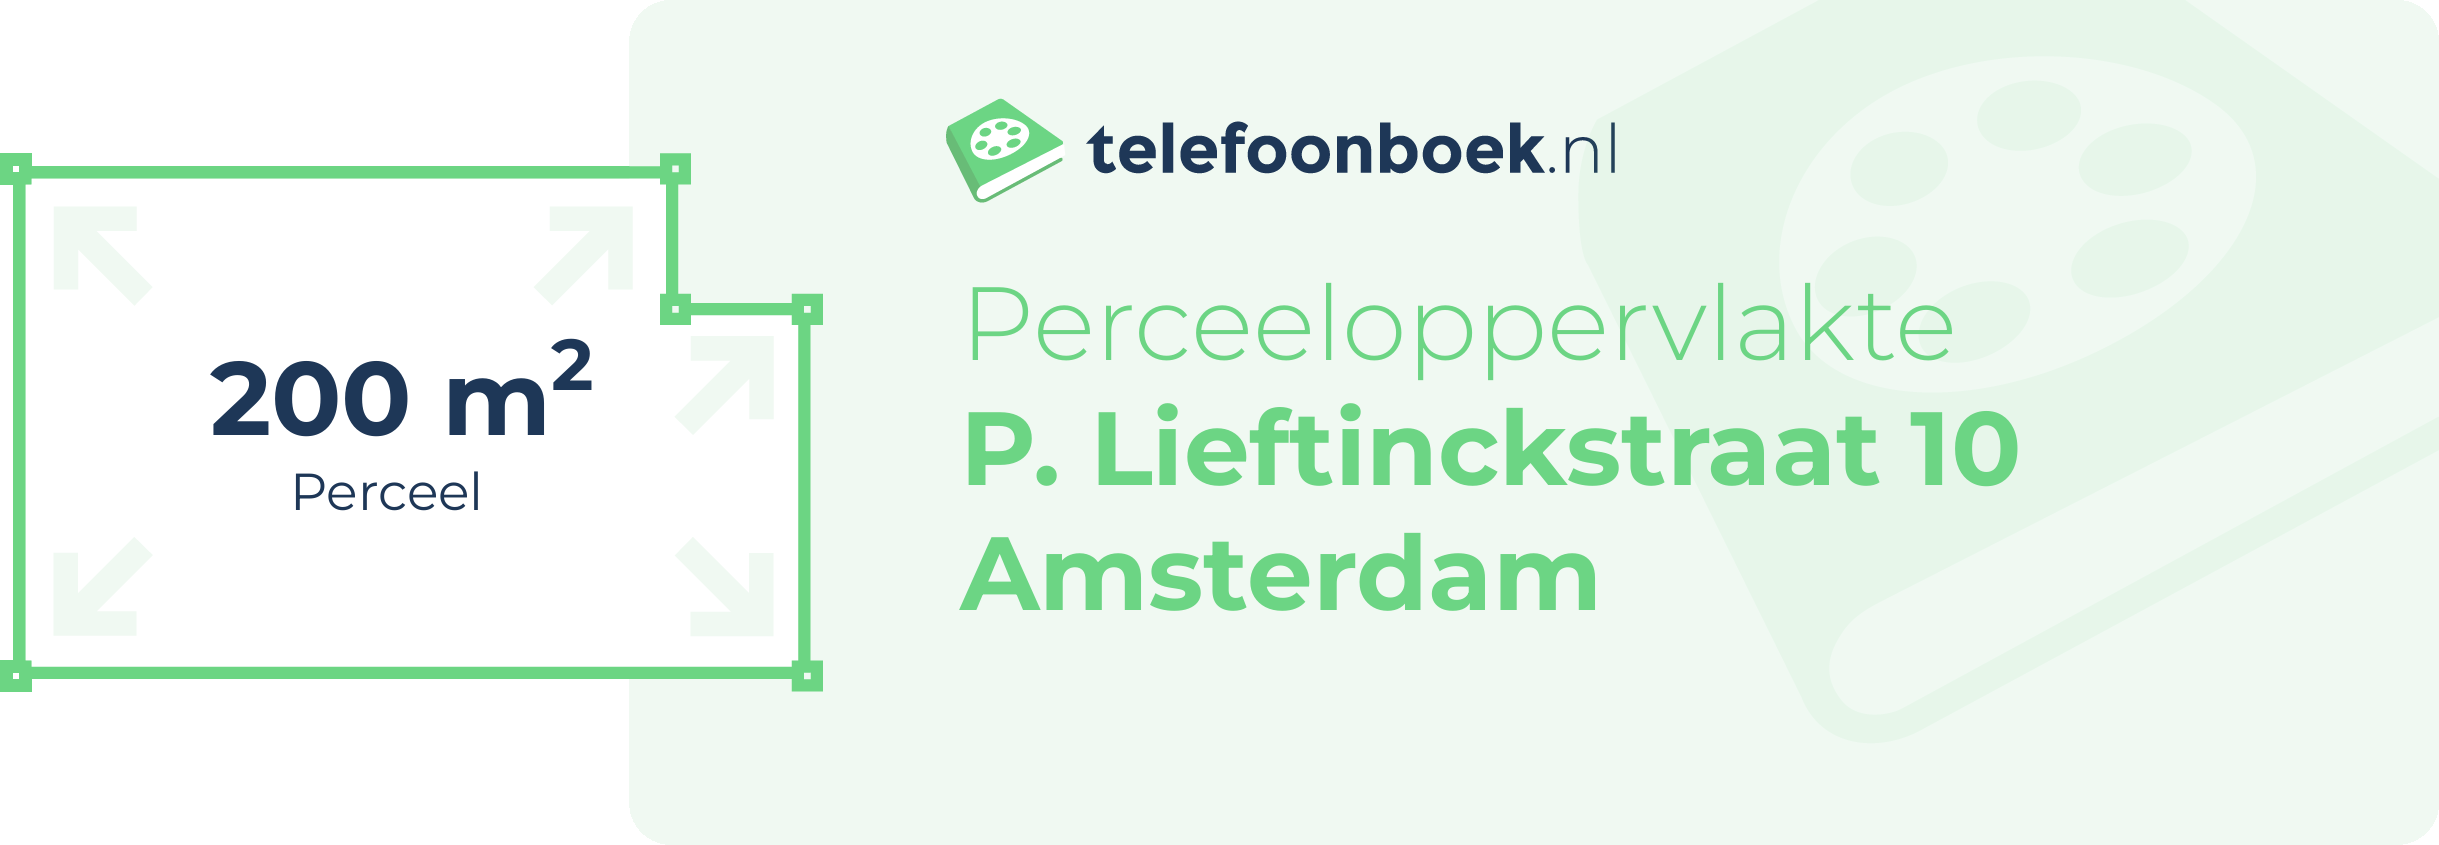 Perceeloppervlakte P. Lieftinckstraat 10 Amsterdam